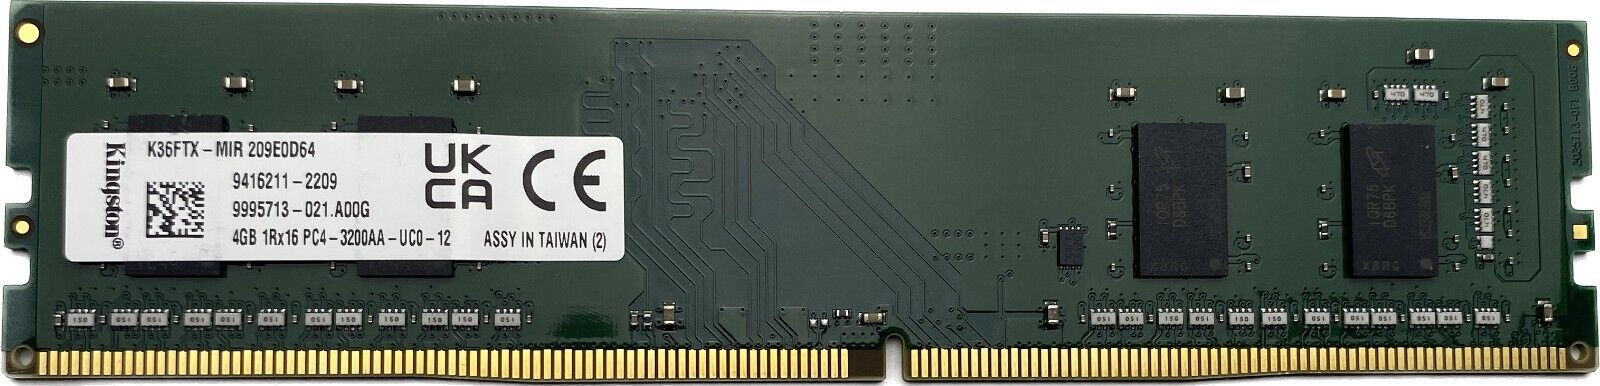 50 Kingston 4GB RAM DDR4 3200MHz 1Rx16 PC4-3200AA-UC0-12 Original Desktop Memory